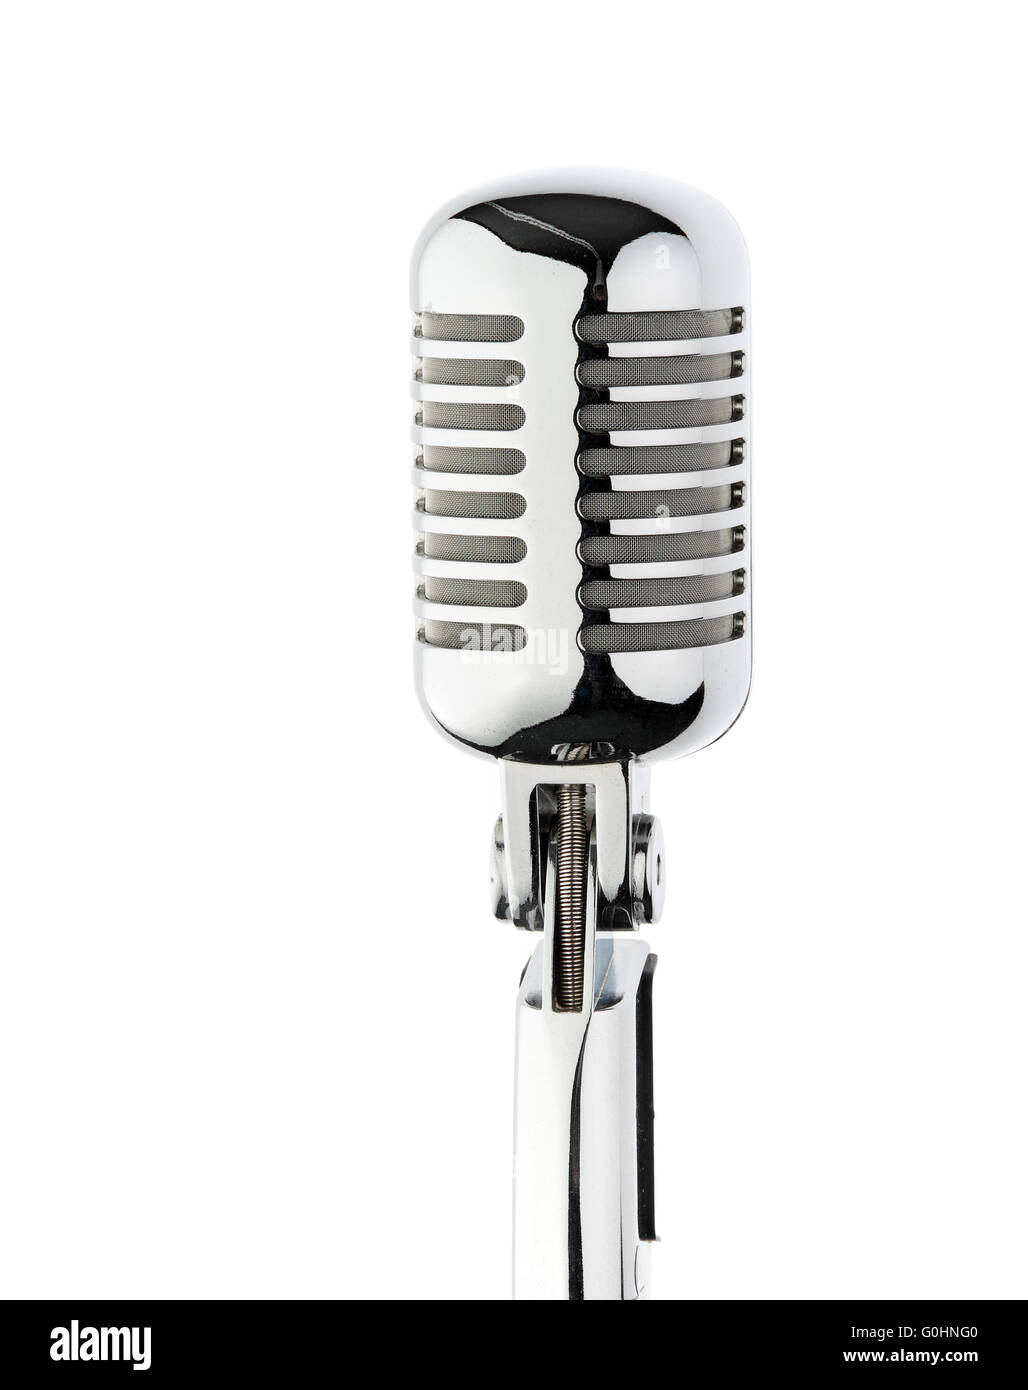 Mikrofon für Karaoke singen, reden, Rede Stockfotografie - Alamy